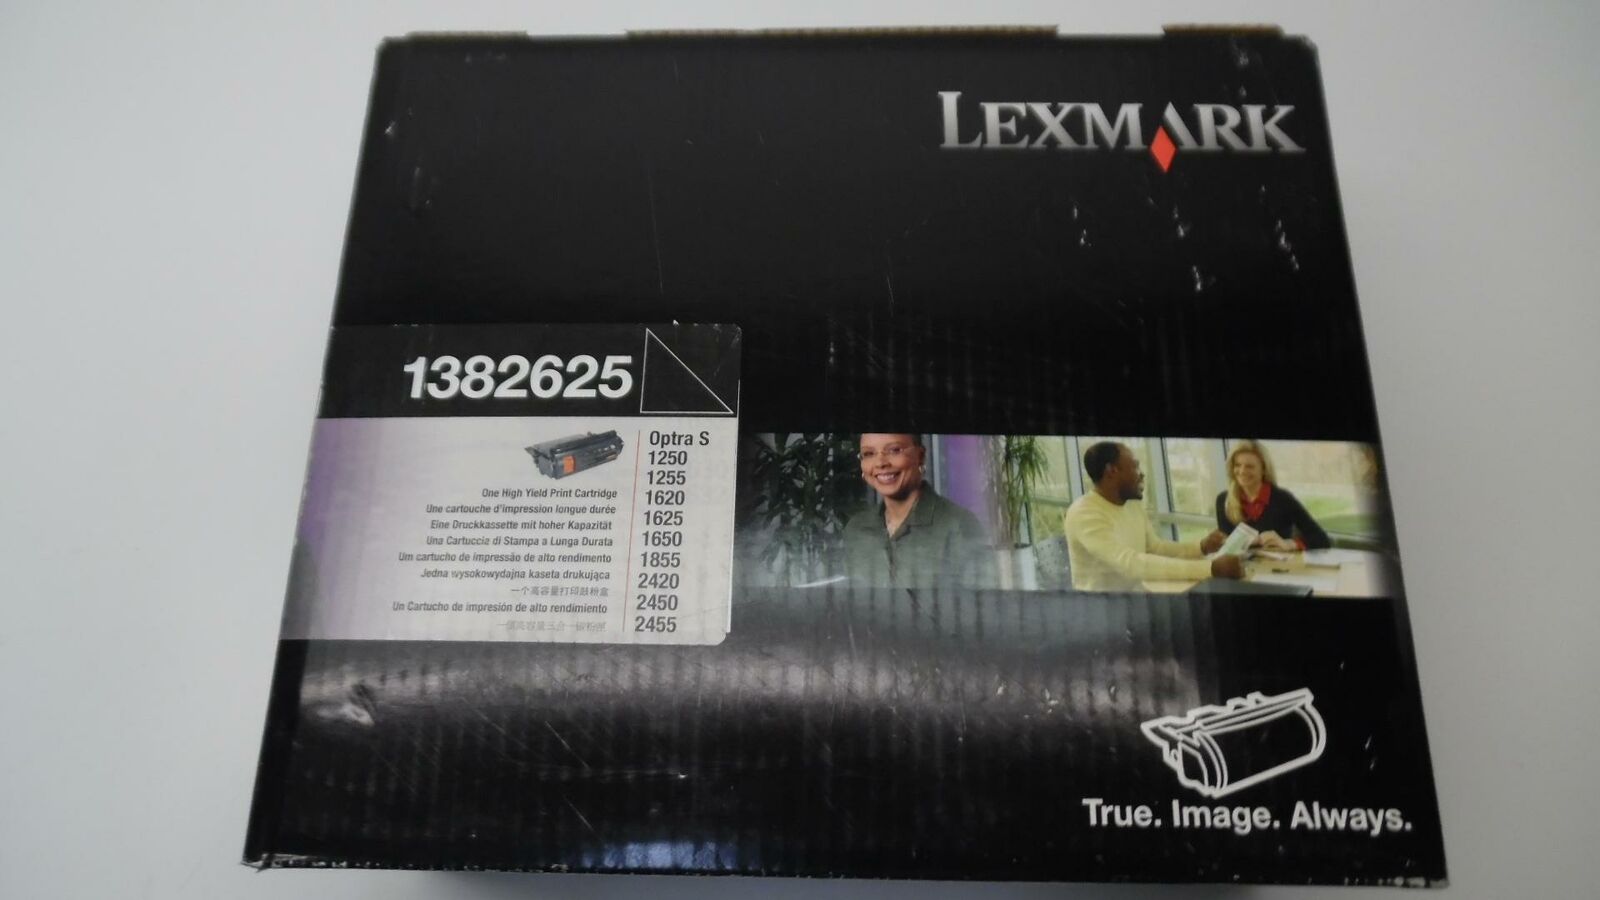 Genuine Lexmark High Yield Black Print Cartridge 1382625 - Open Box READ